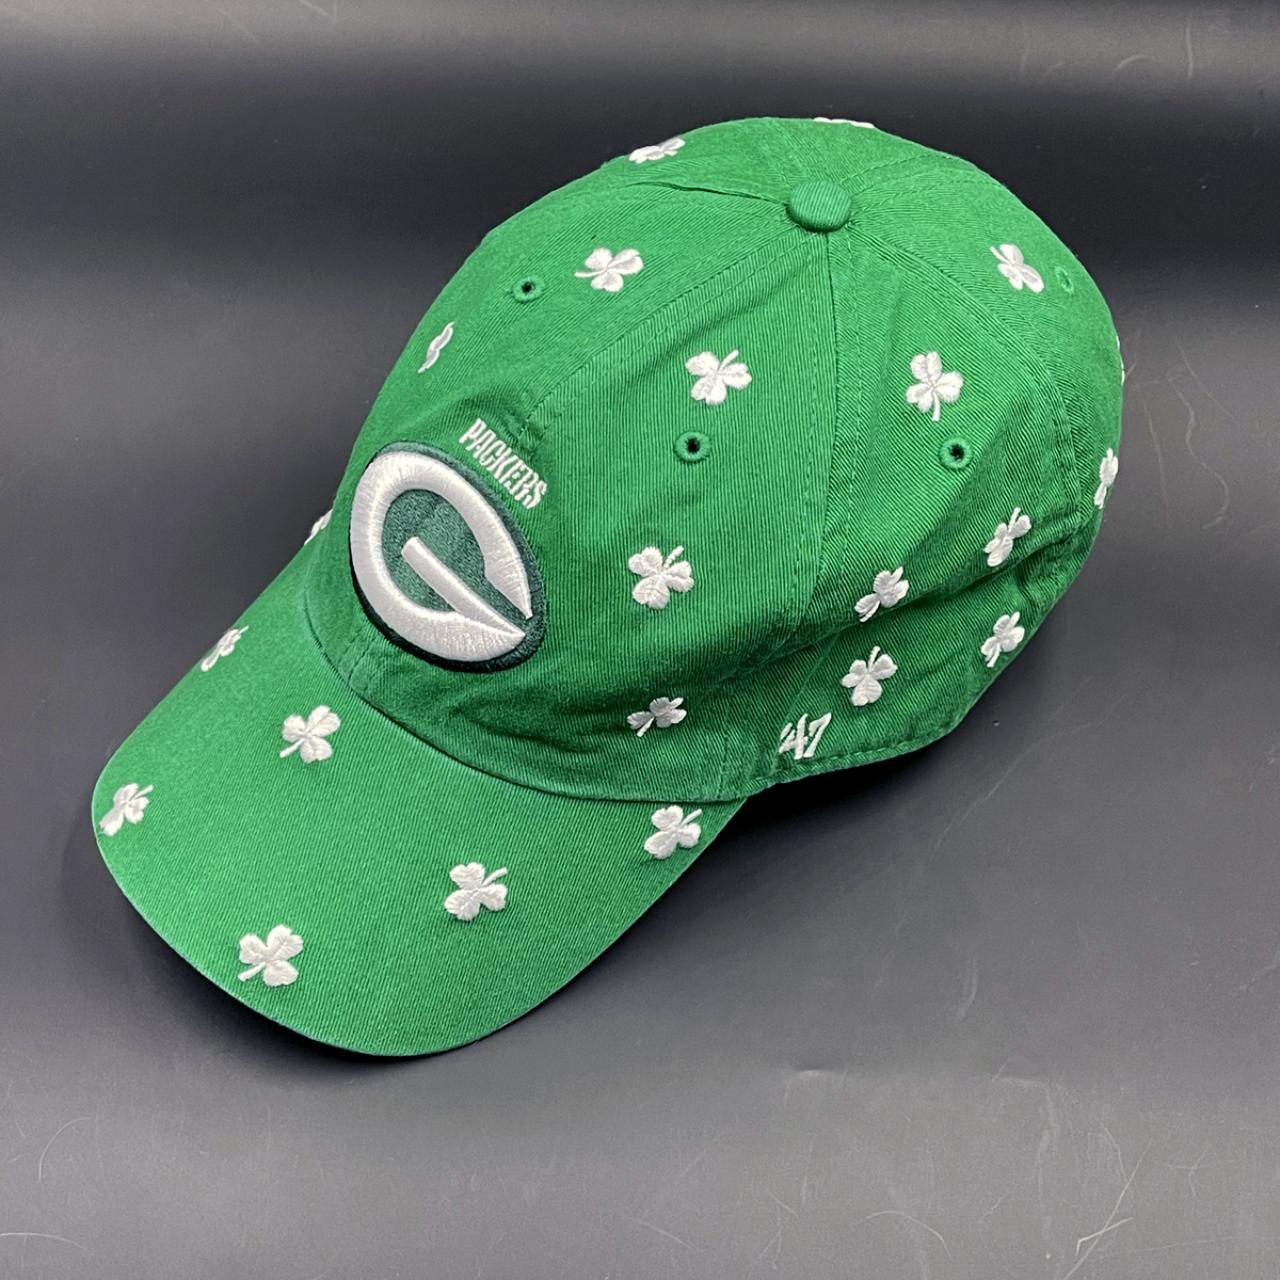 47 Men's Caps - Green